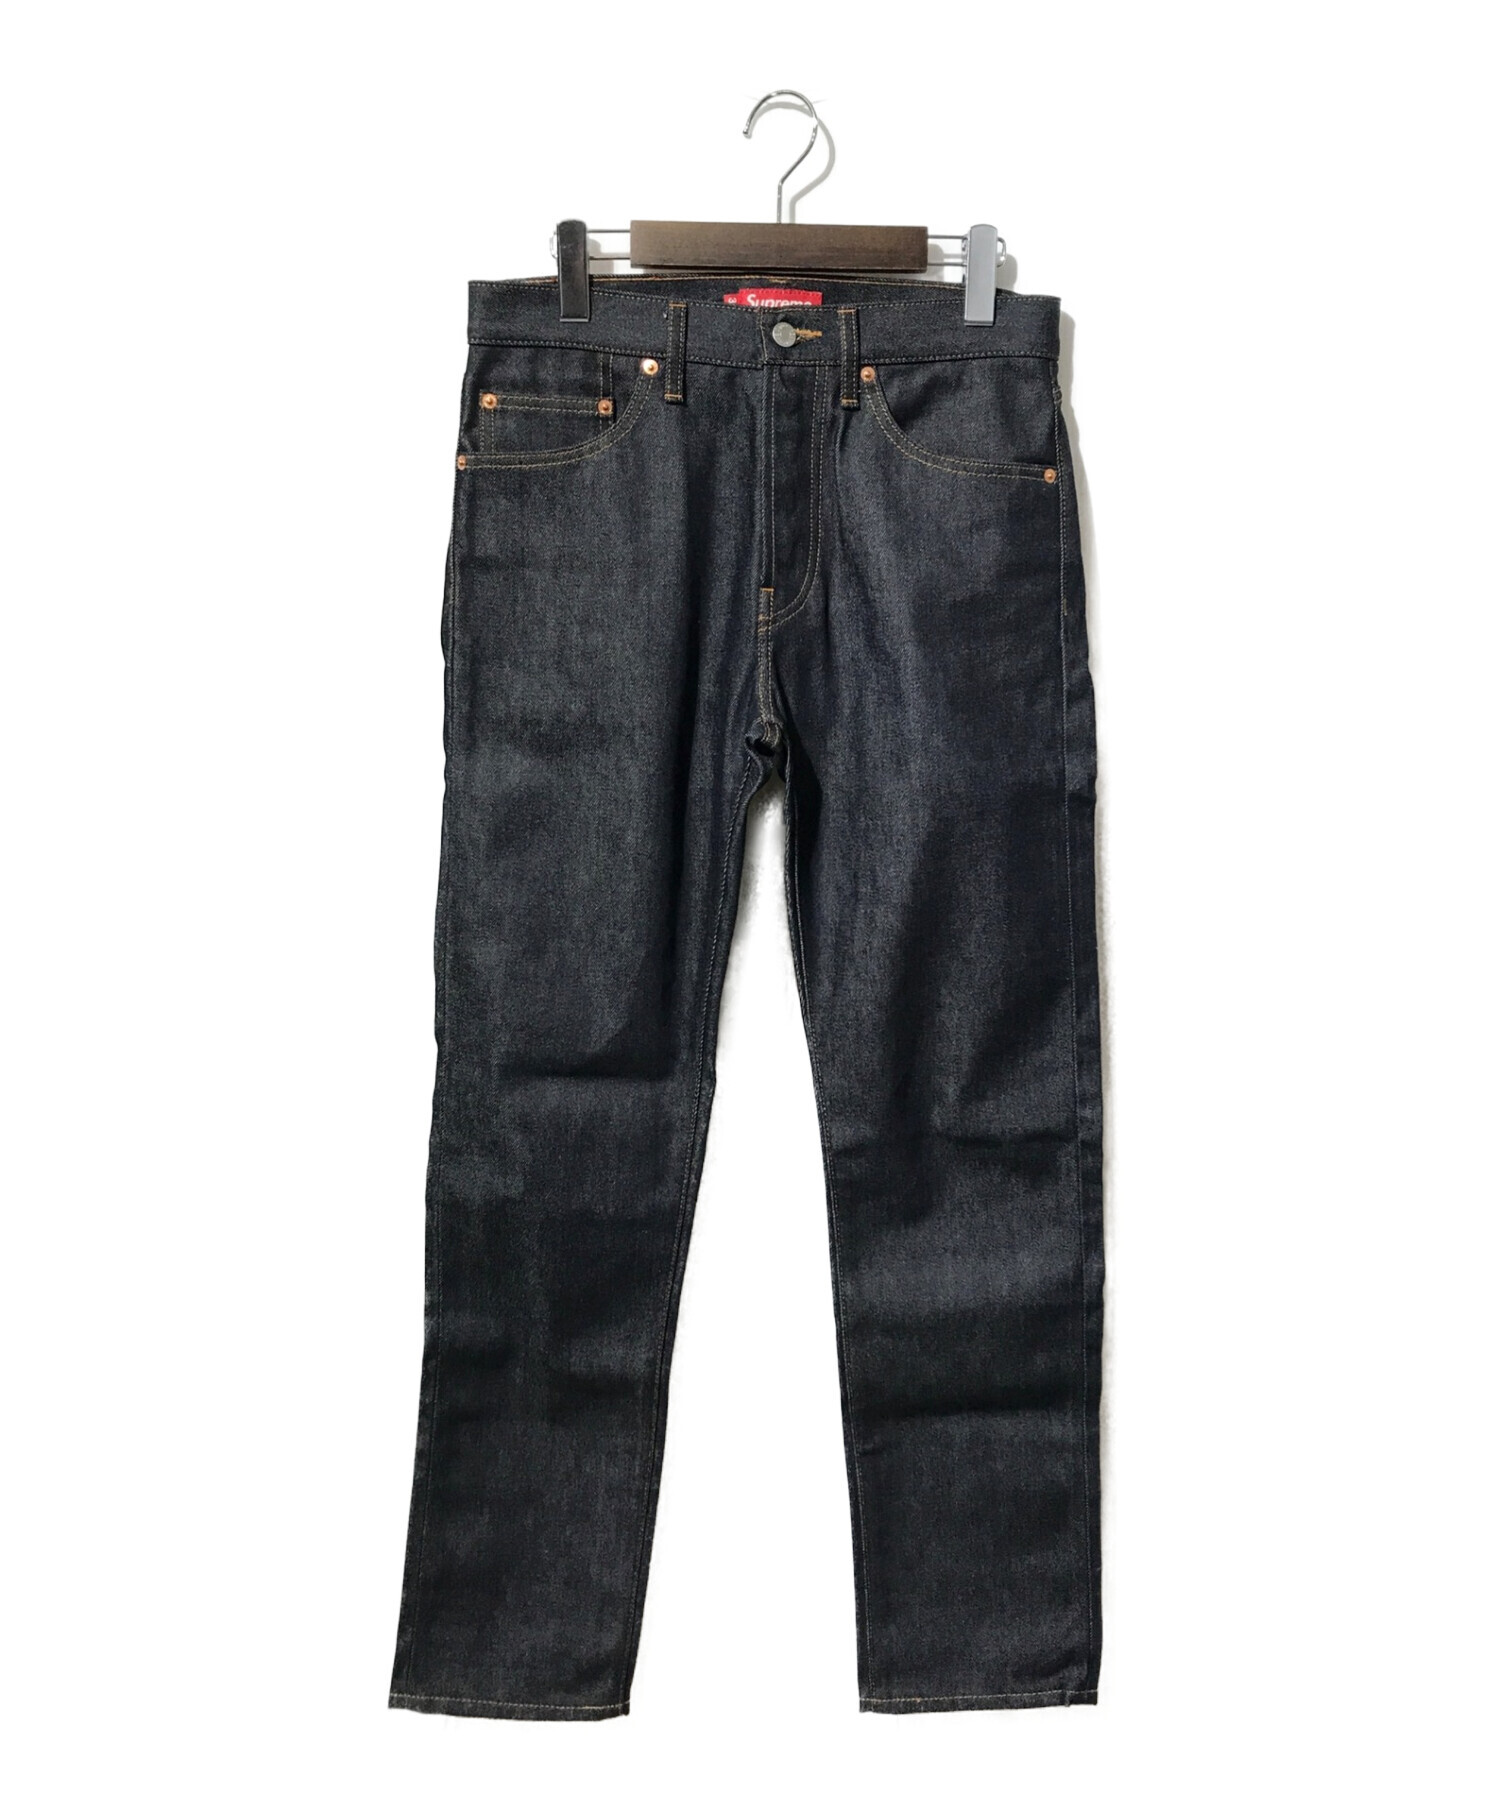 Supreme シュプリーム Rigid Slim Jeans Indigo裾幅18cm - デニム/ジーンズ